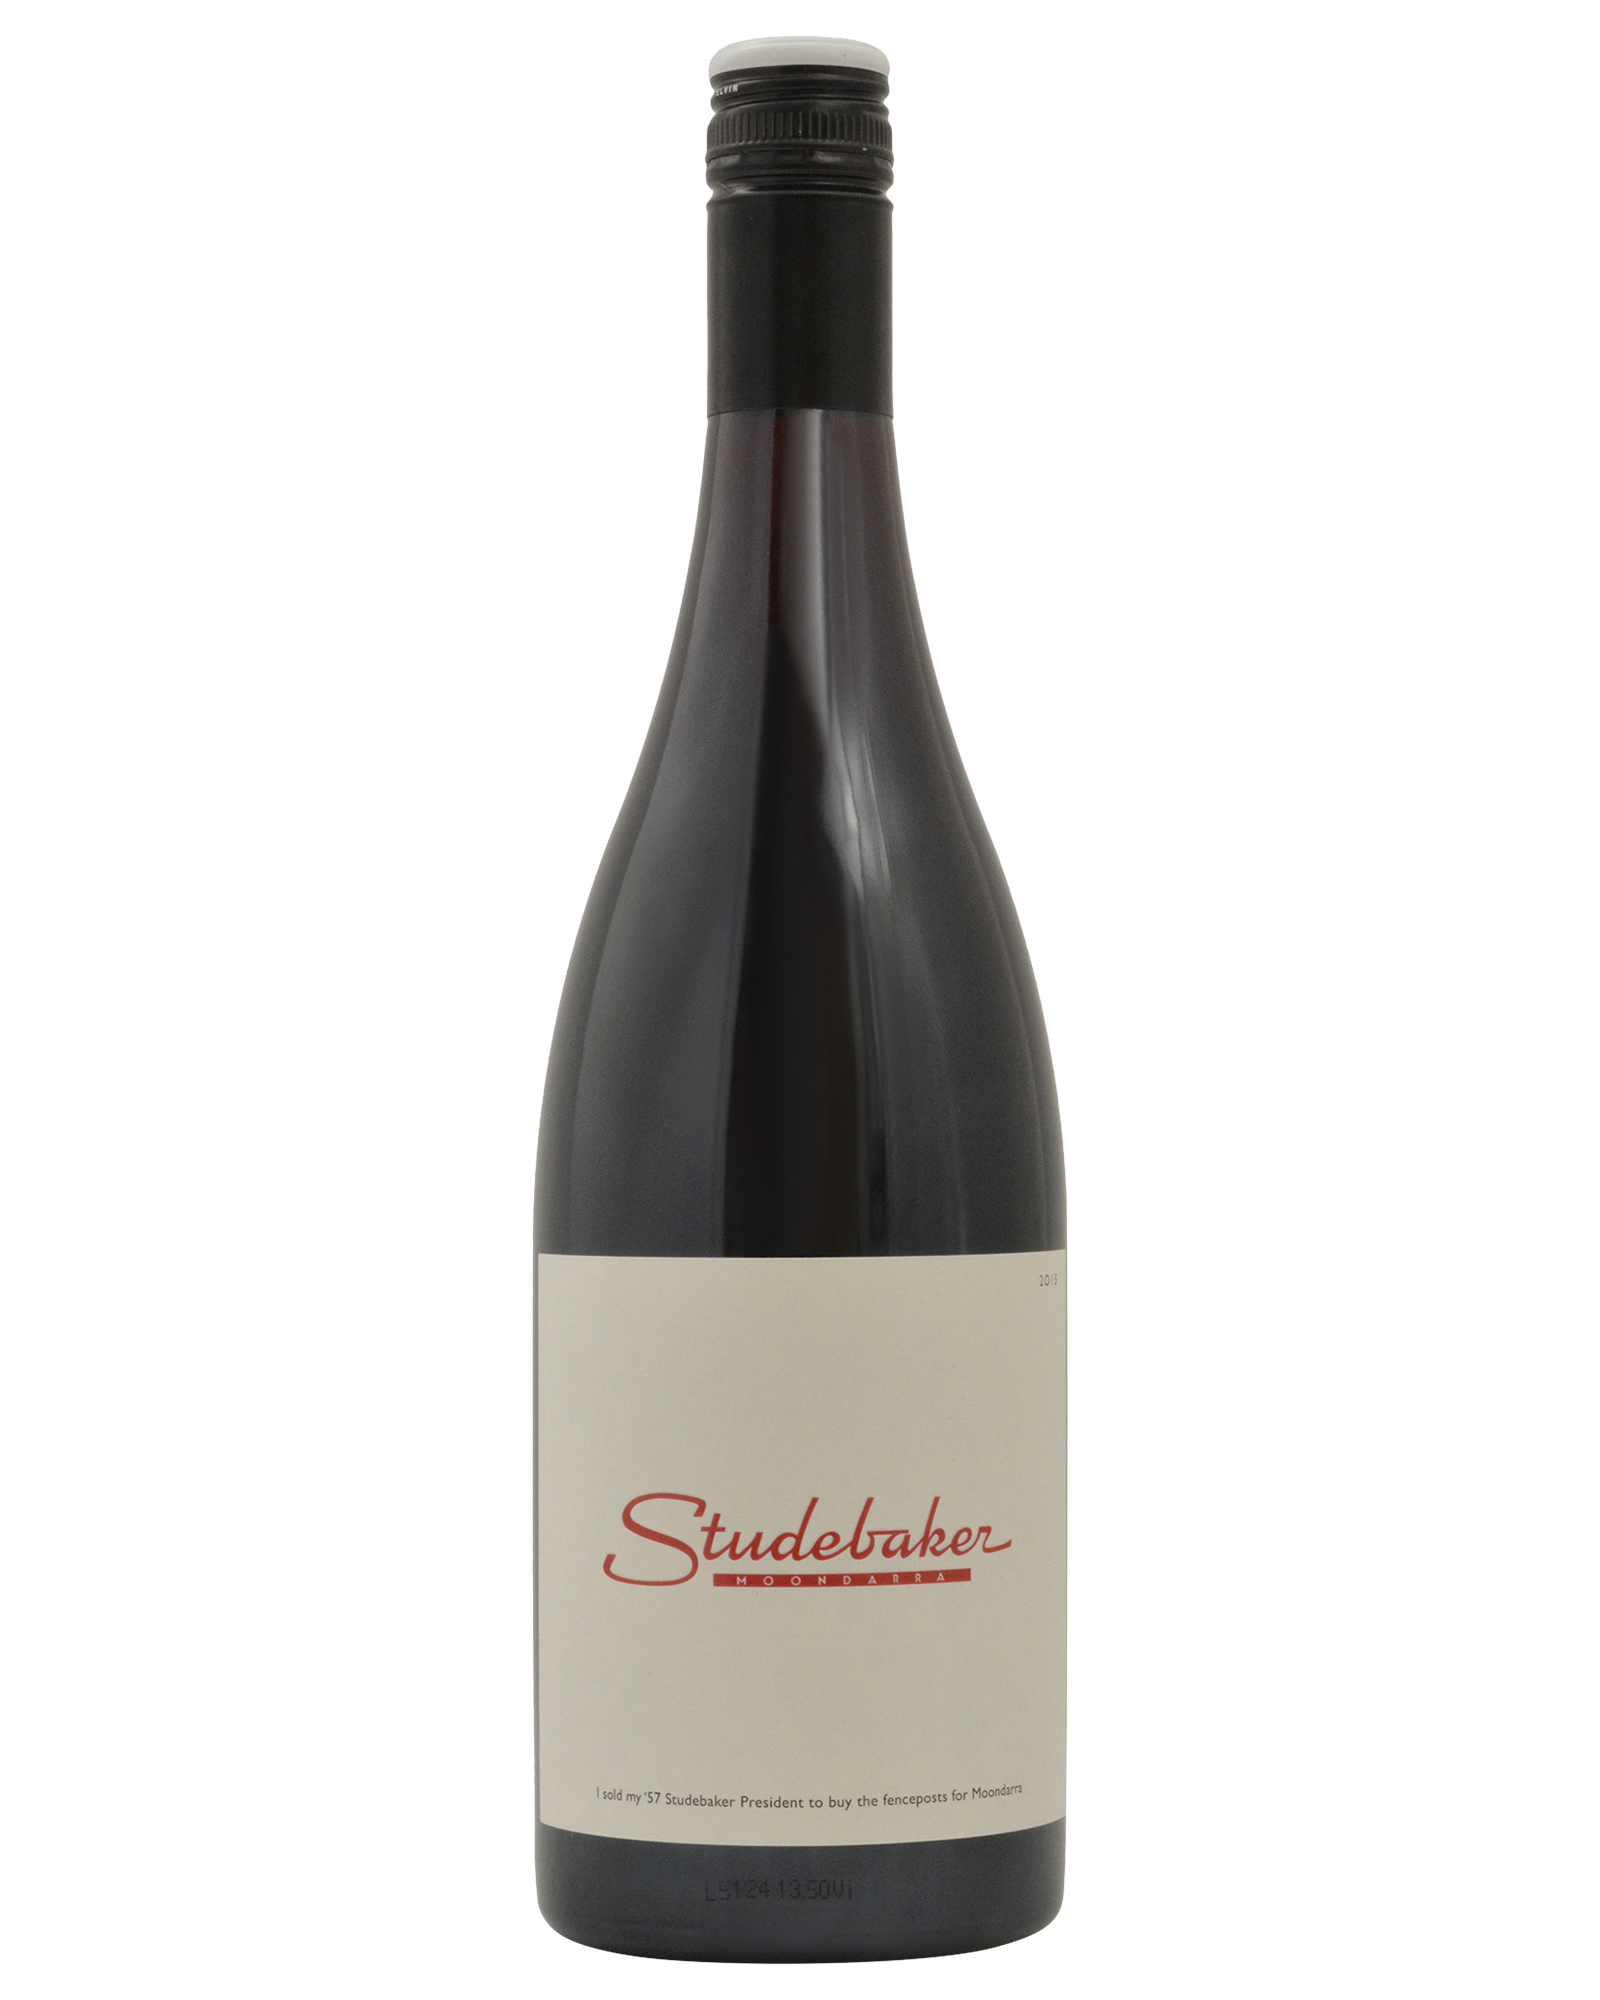 Moondarra Studebaker Pinot Noir